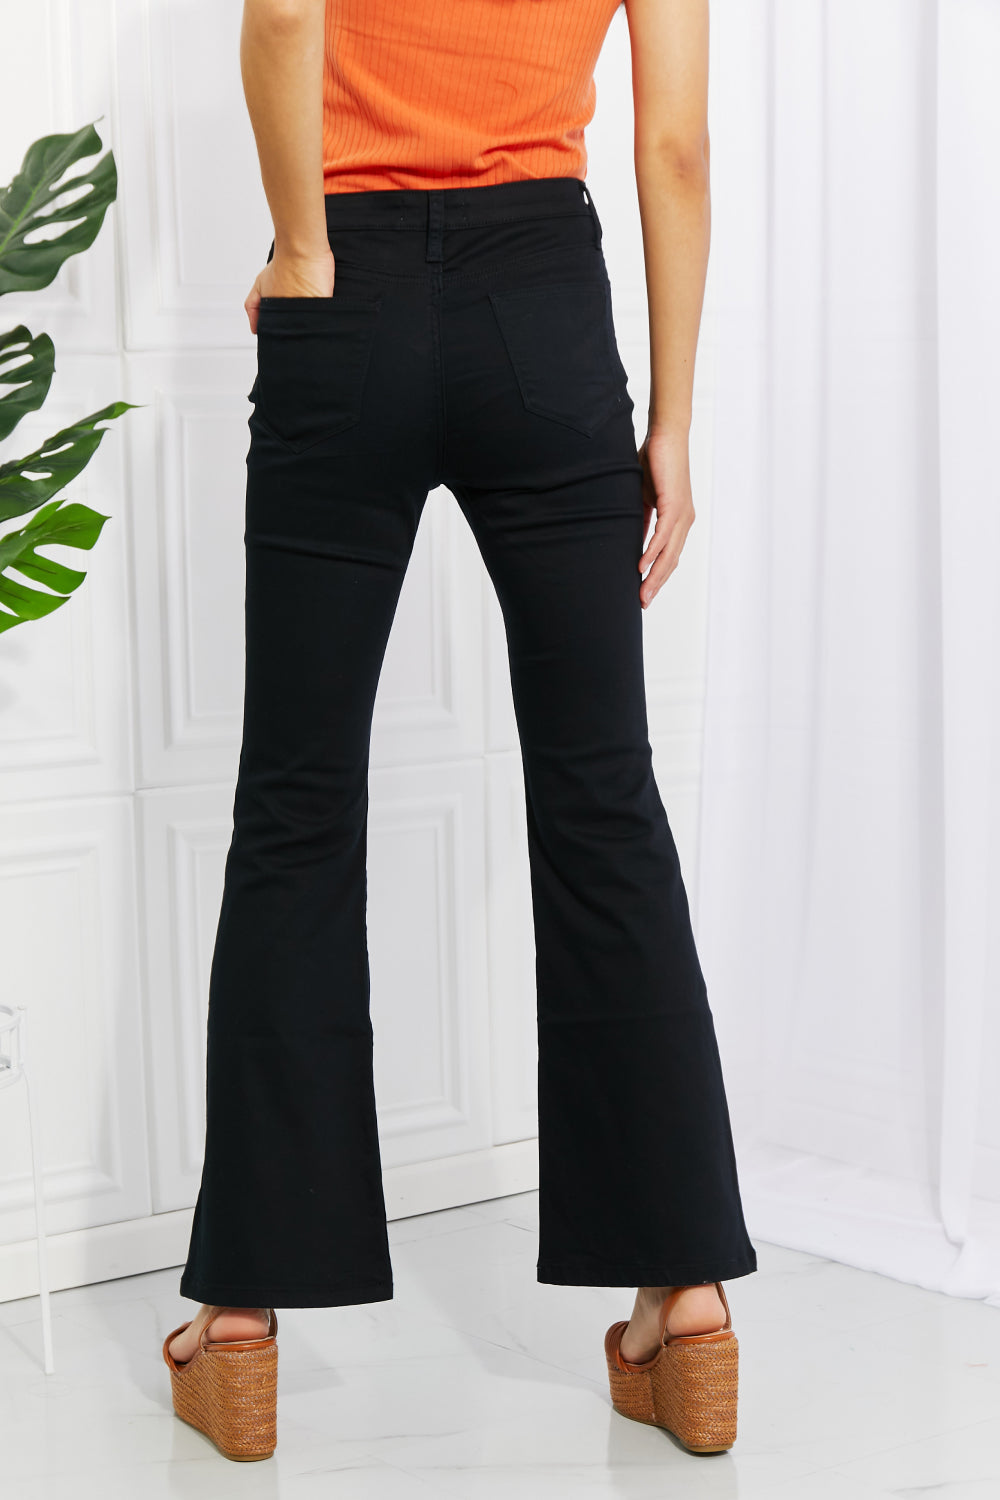 Zenana Clementine High-Rise Bootcut Pants in Black